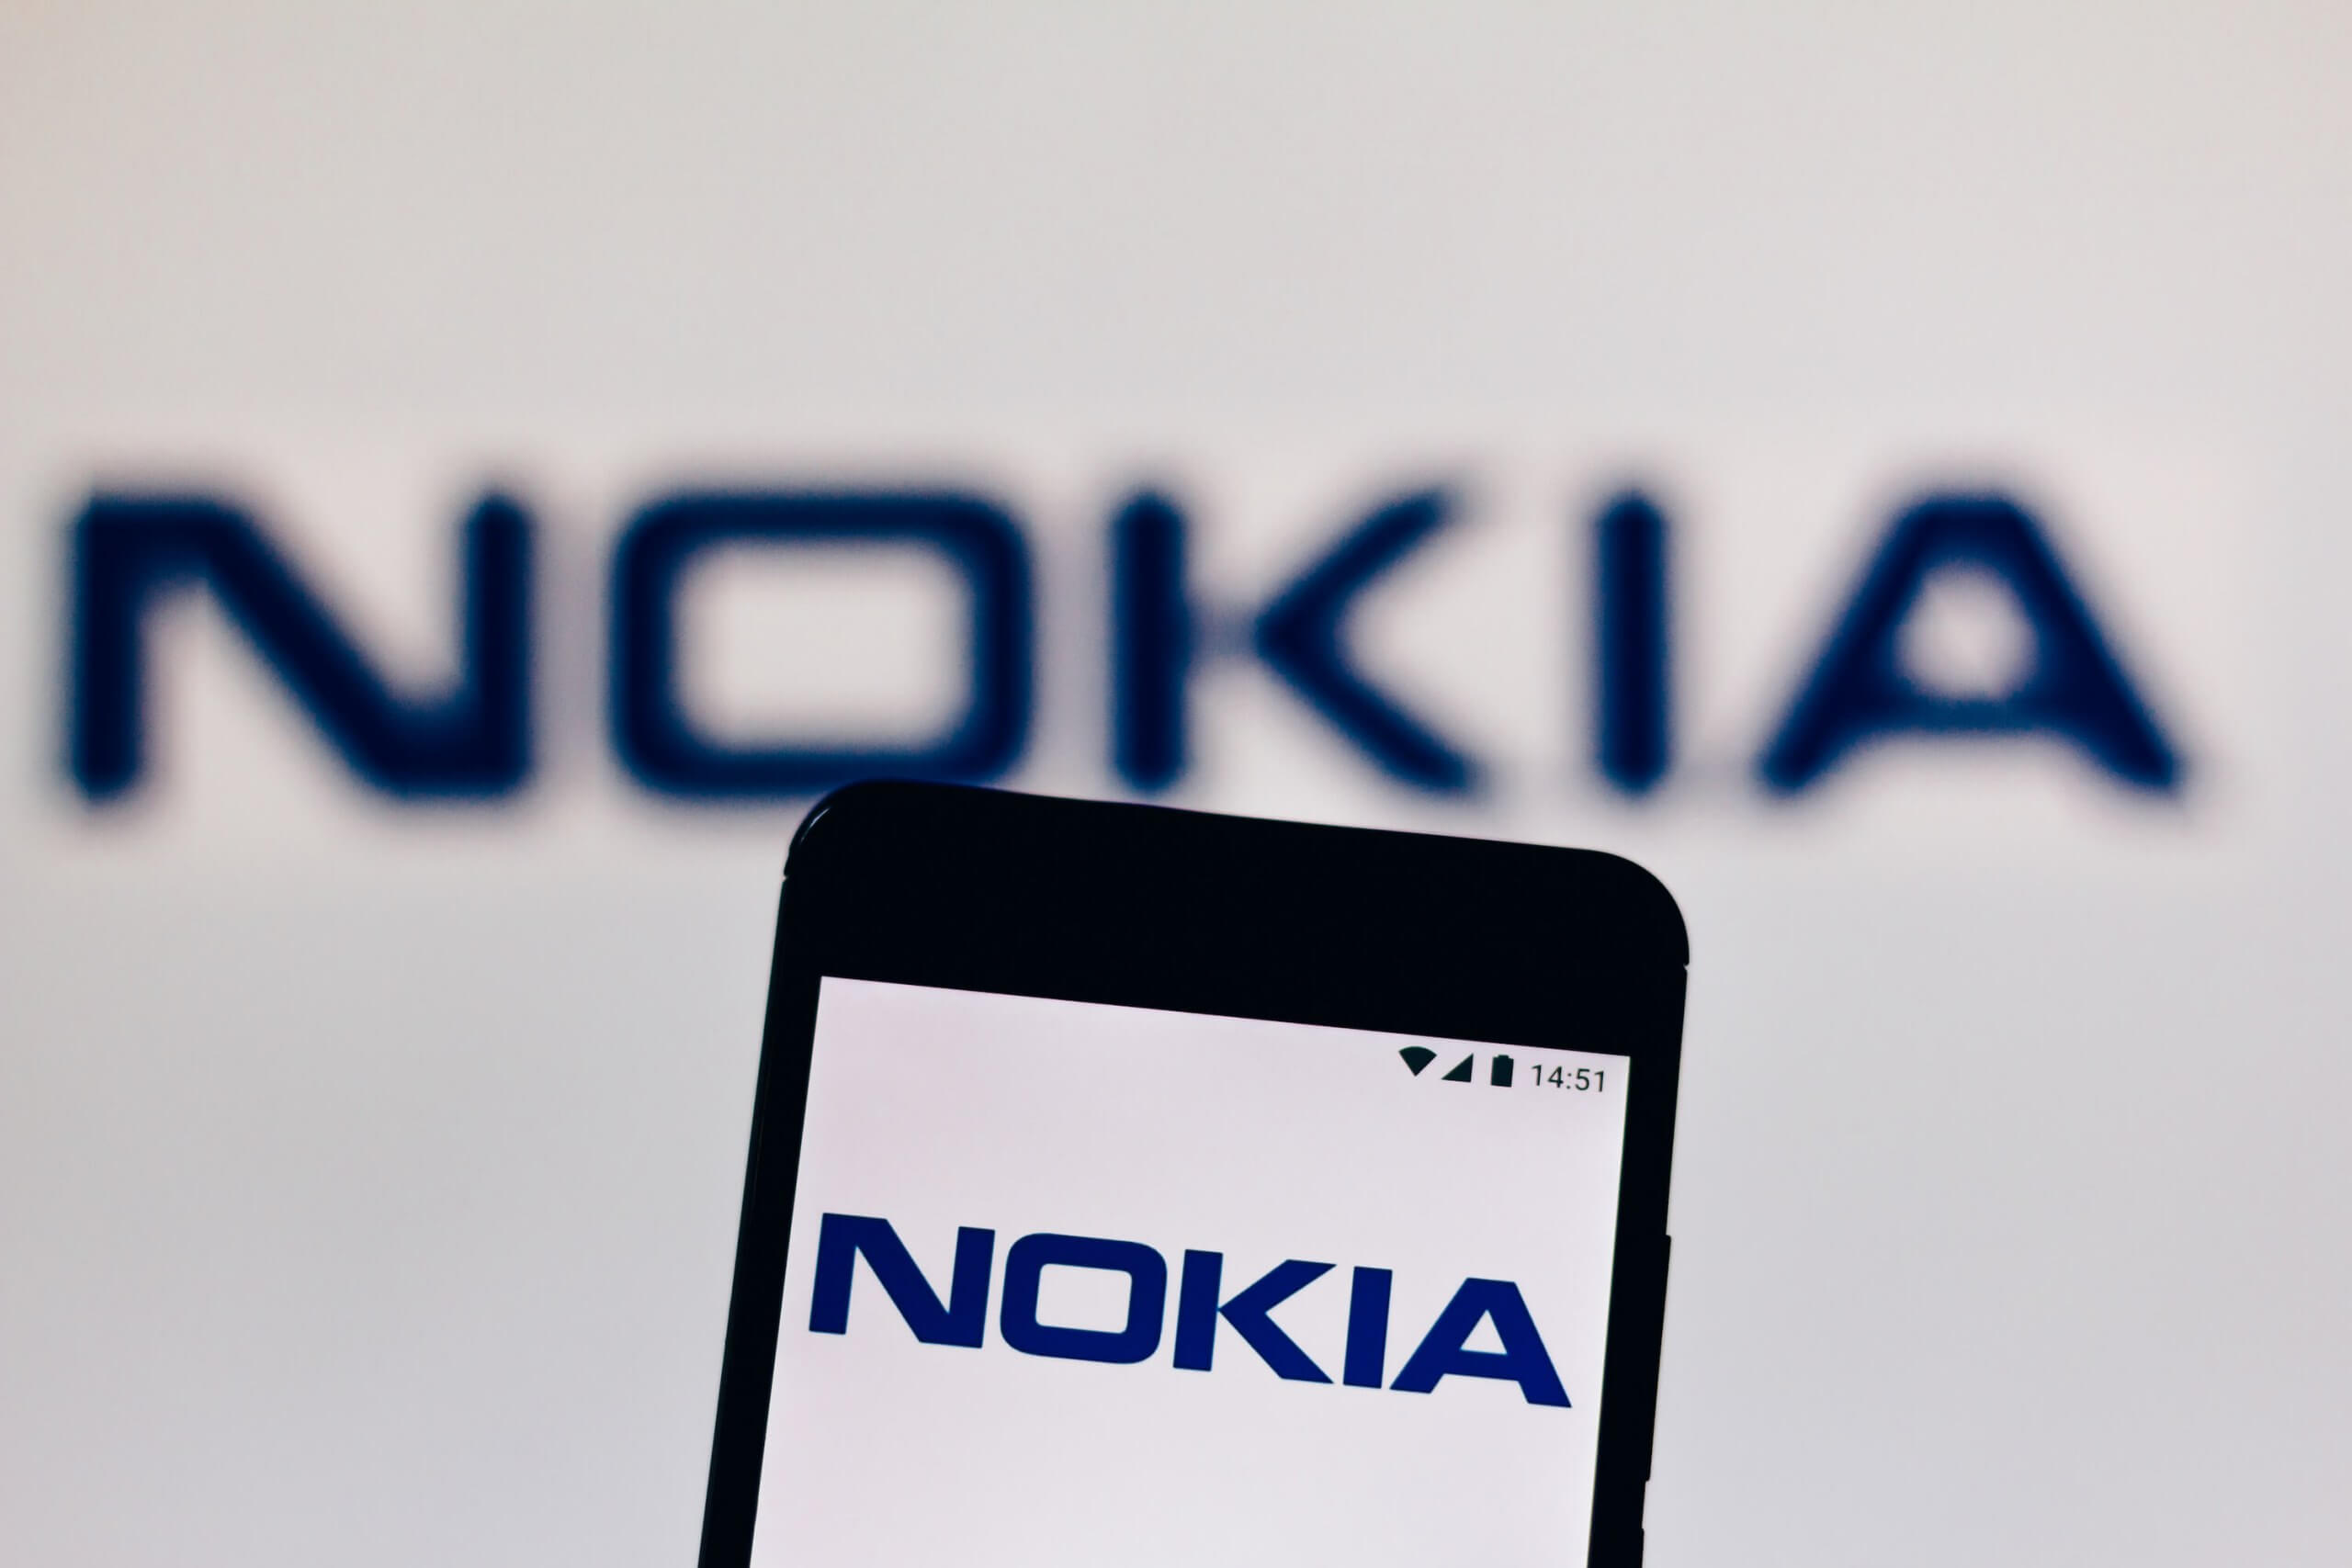 Finland investigating Nokia for alleged GDPR violations